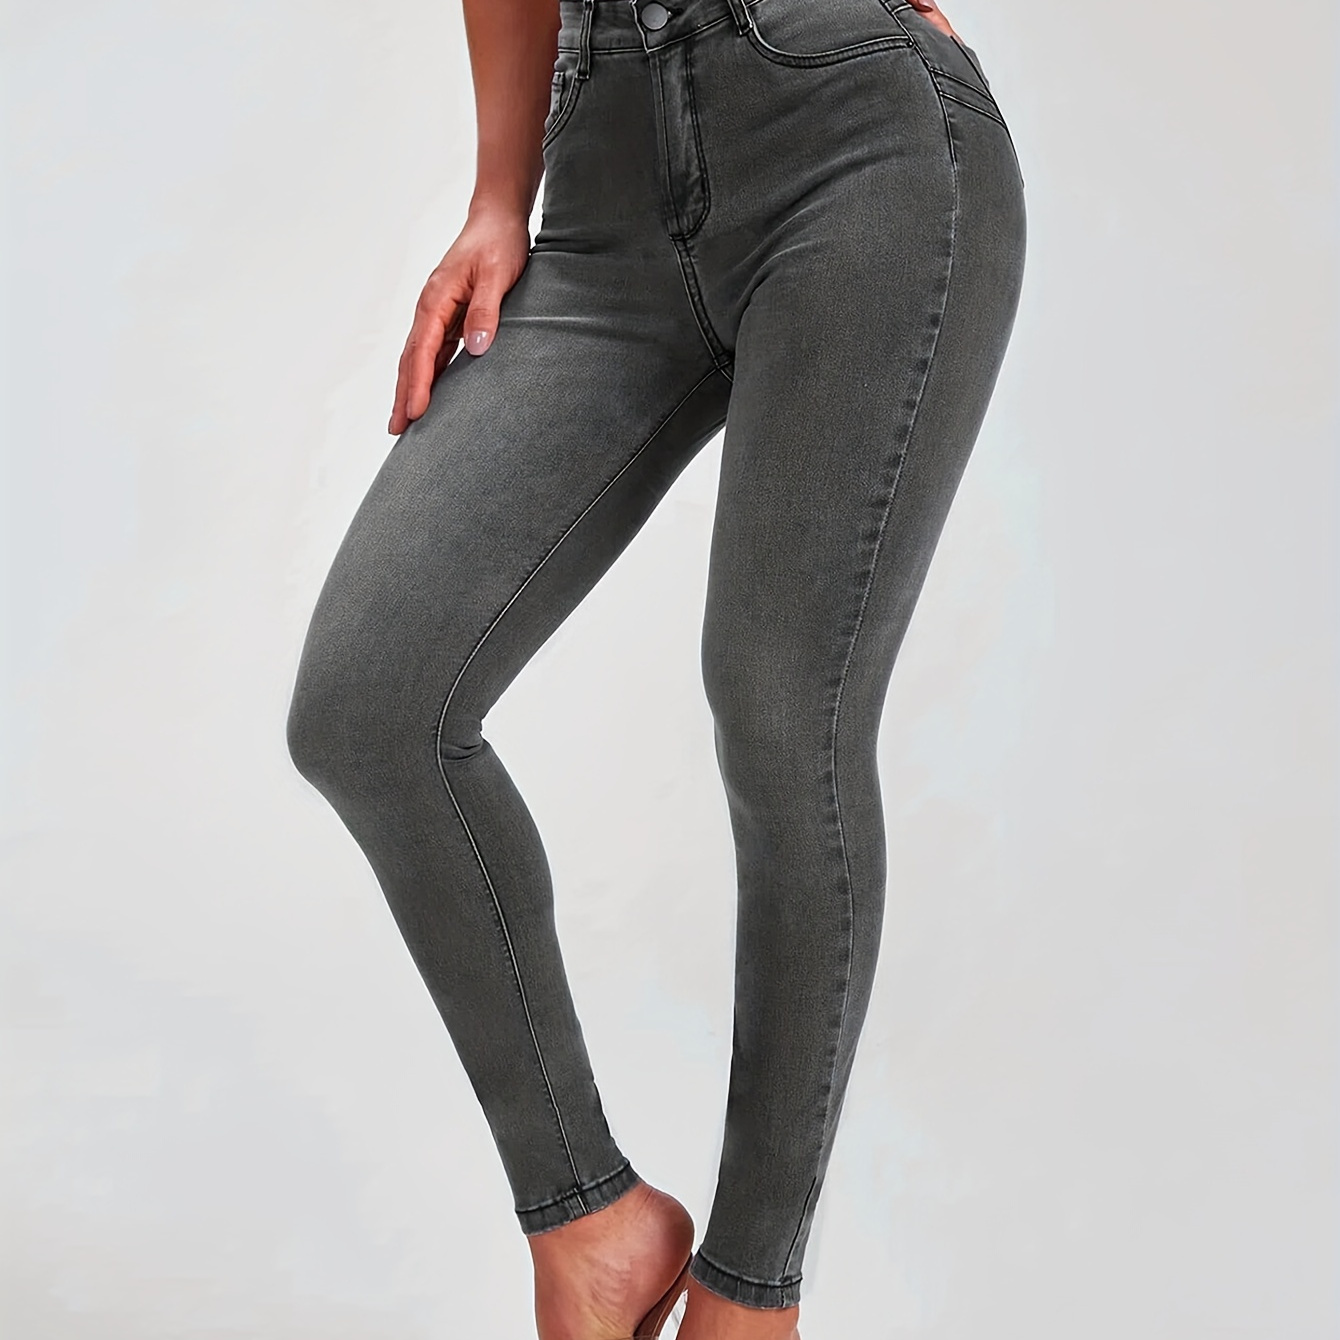 

High Rise Stretchy Grey Skinny Jeans, High Plain Design Tight Fit Denim Pants, Women's Denim Jeans & Clothing